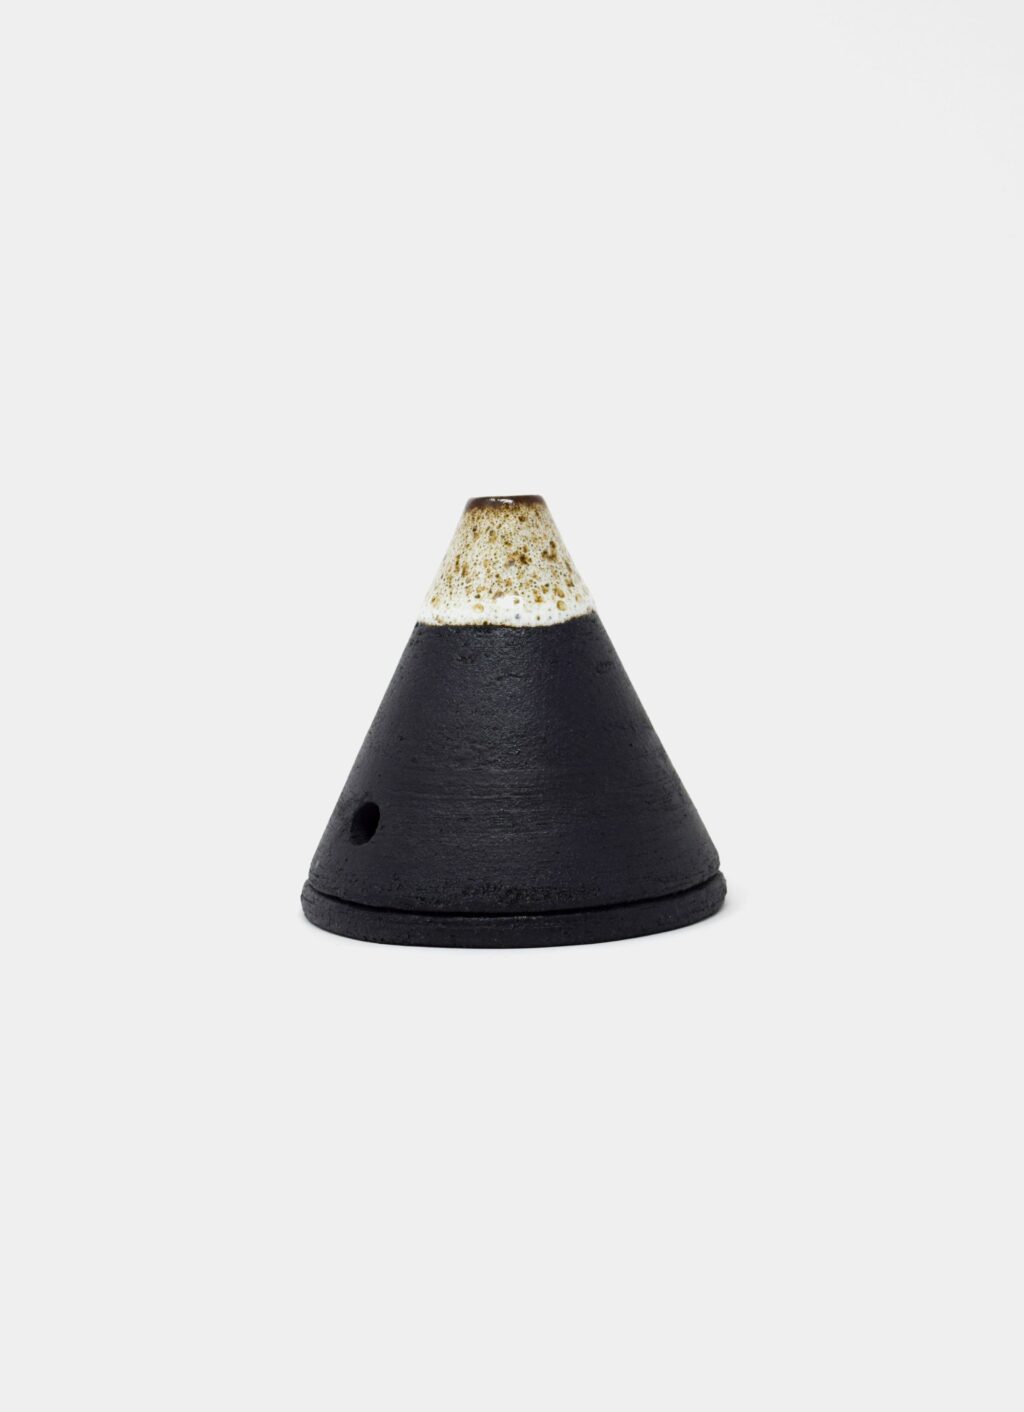 Studio Arhoj - Smoke Mountain - Yokull - Incense holder and burner